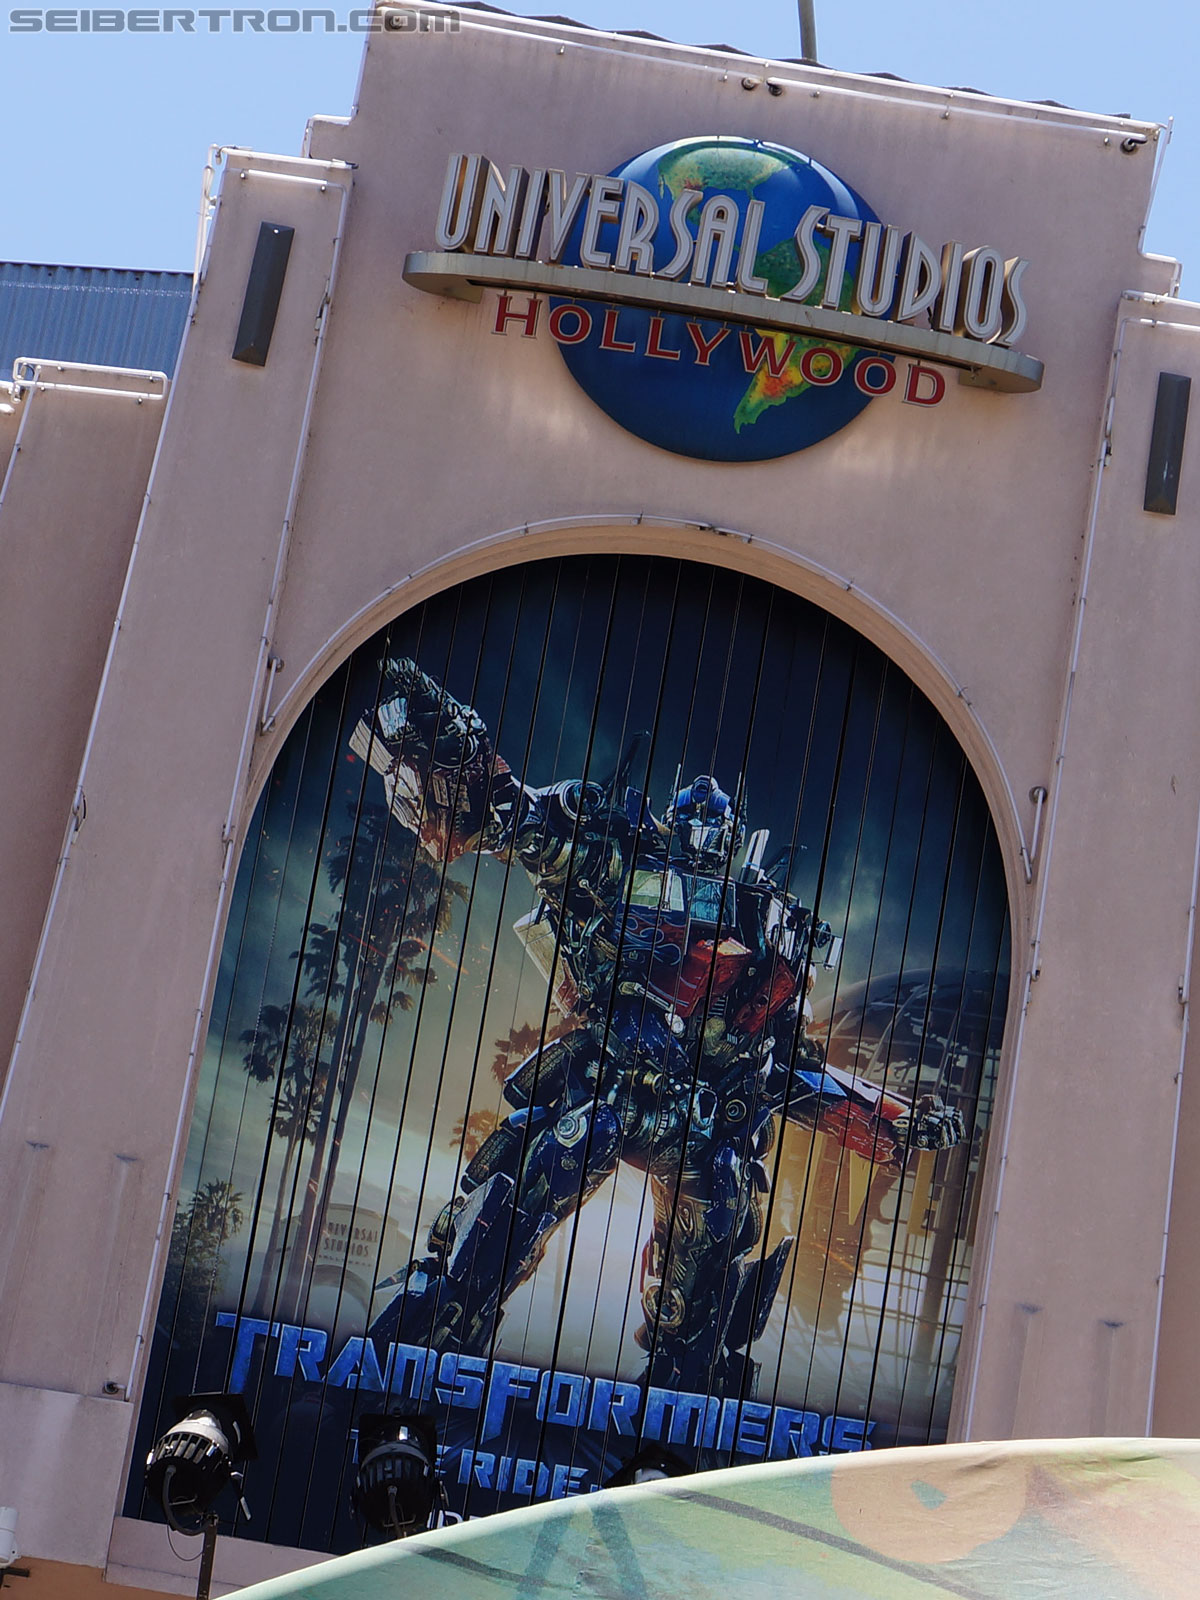 Transformers News: Mandarin speaking Megatron part of Universal Studios Hollywood's Year of the Monkey Celebration